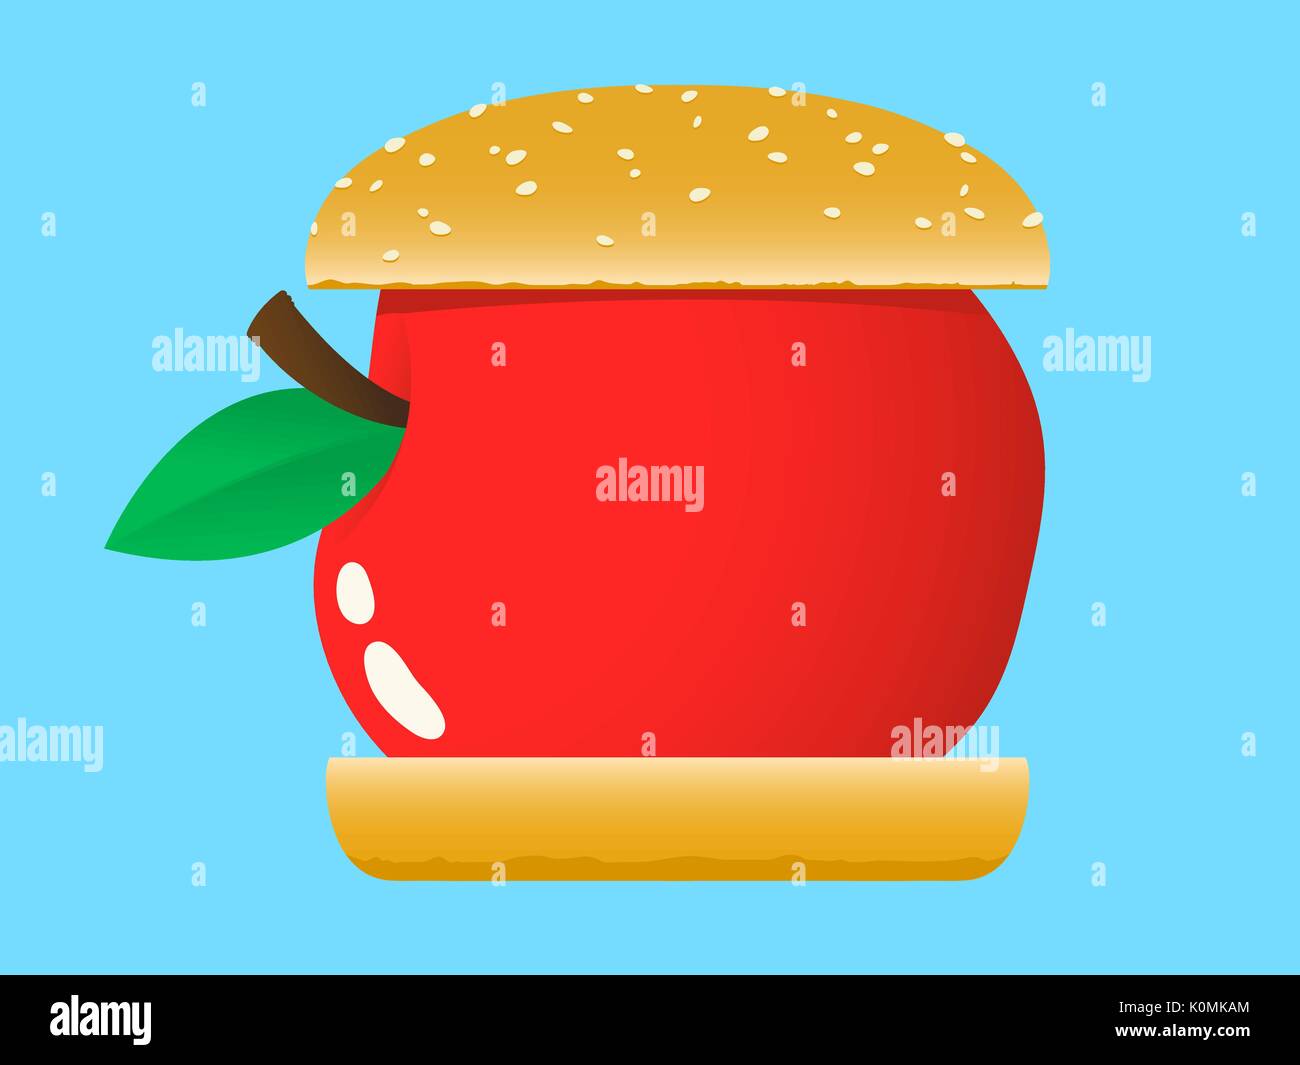 Apple hamburger fast food illustration Stock Vector